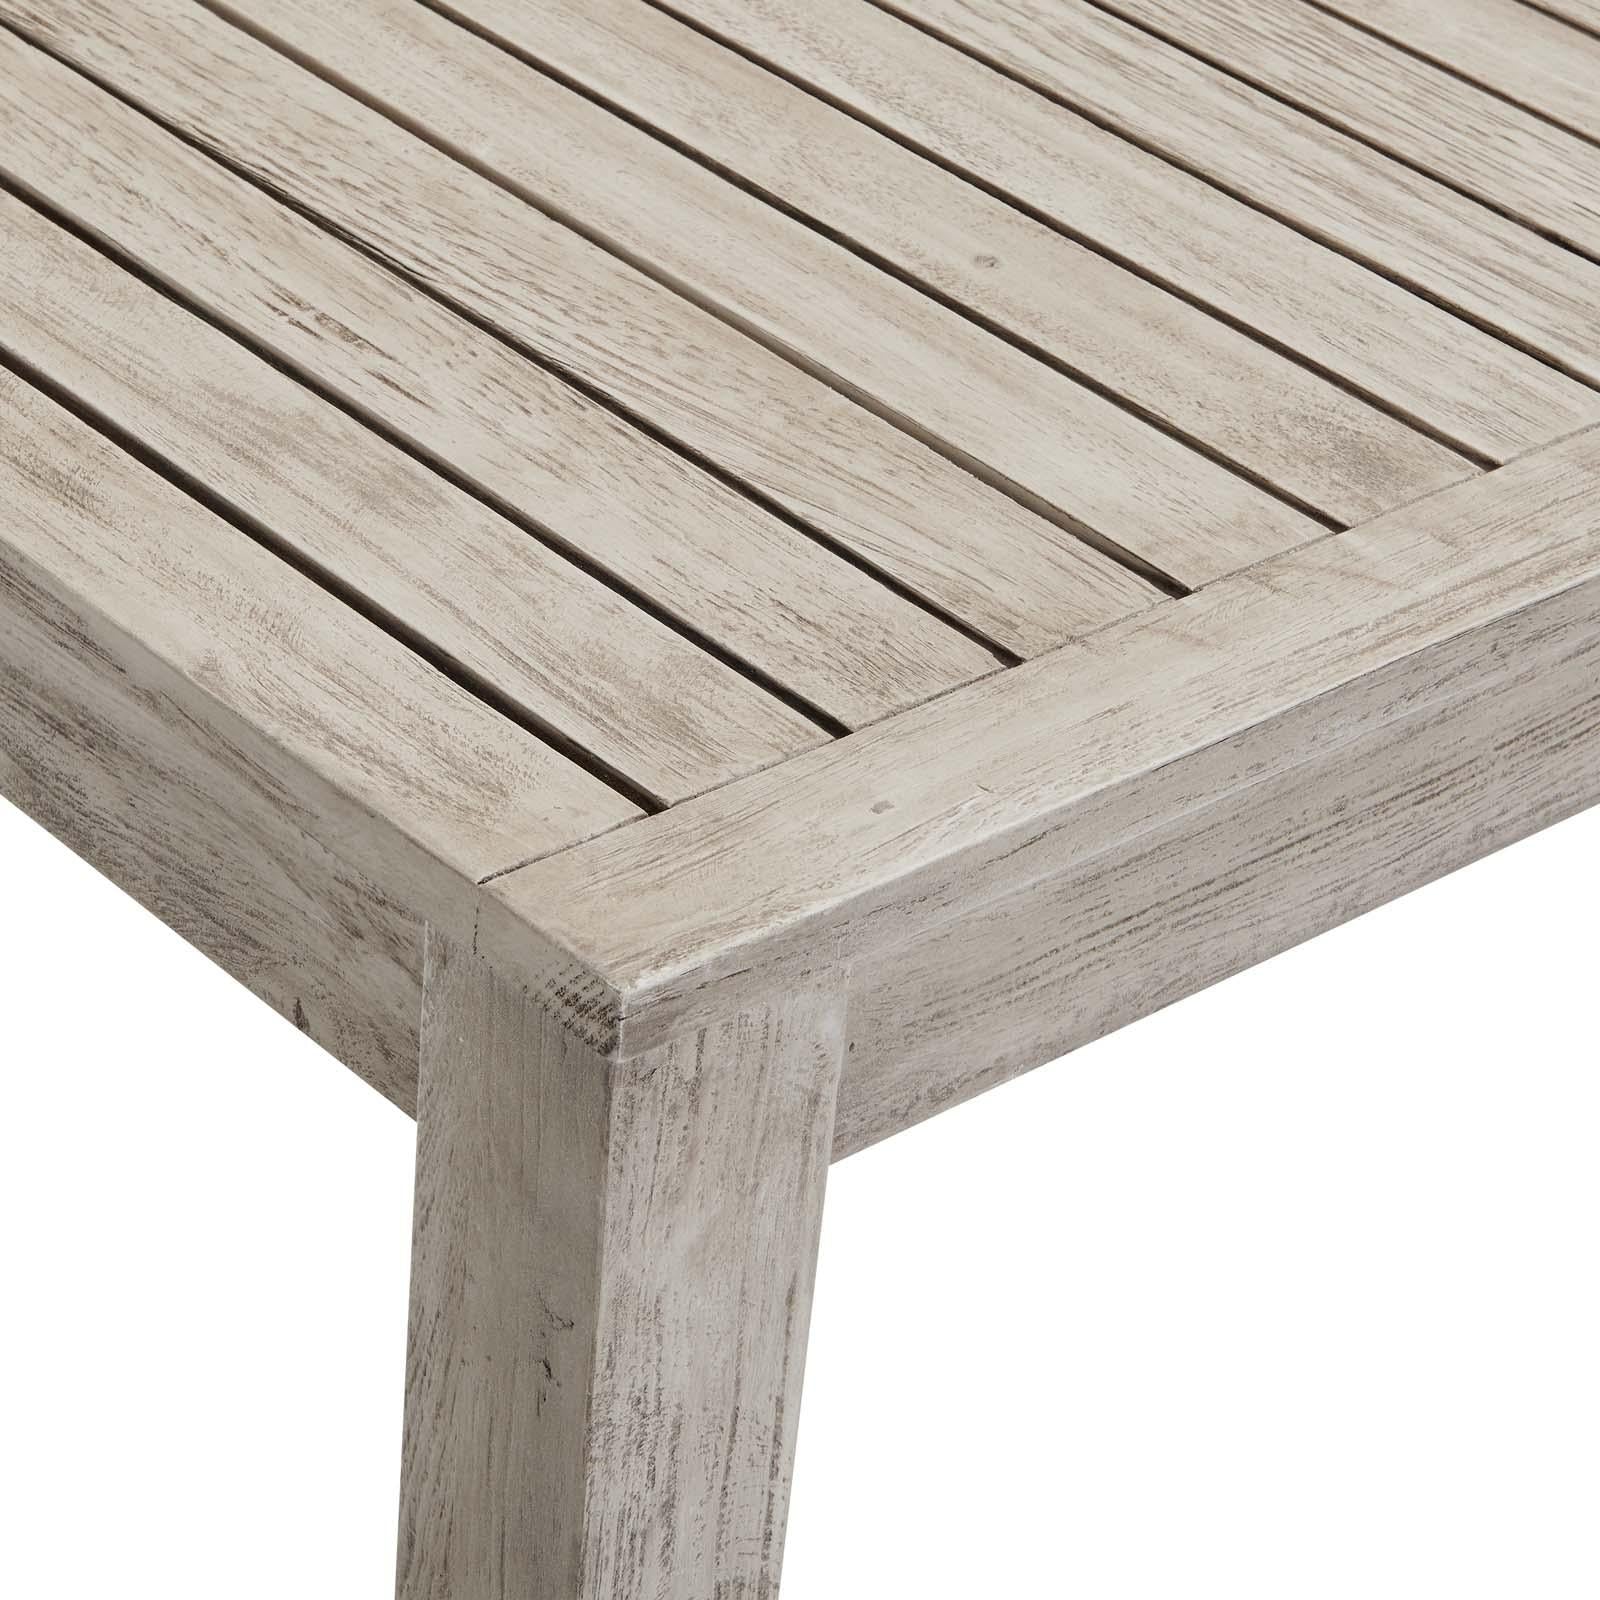 Modway Furniture Modern Wiscasset 5 Piece Outdoor Patio Acacia Wood Bar Set - EEI-3759